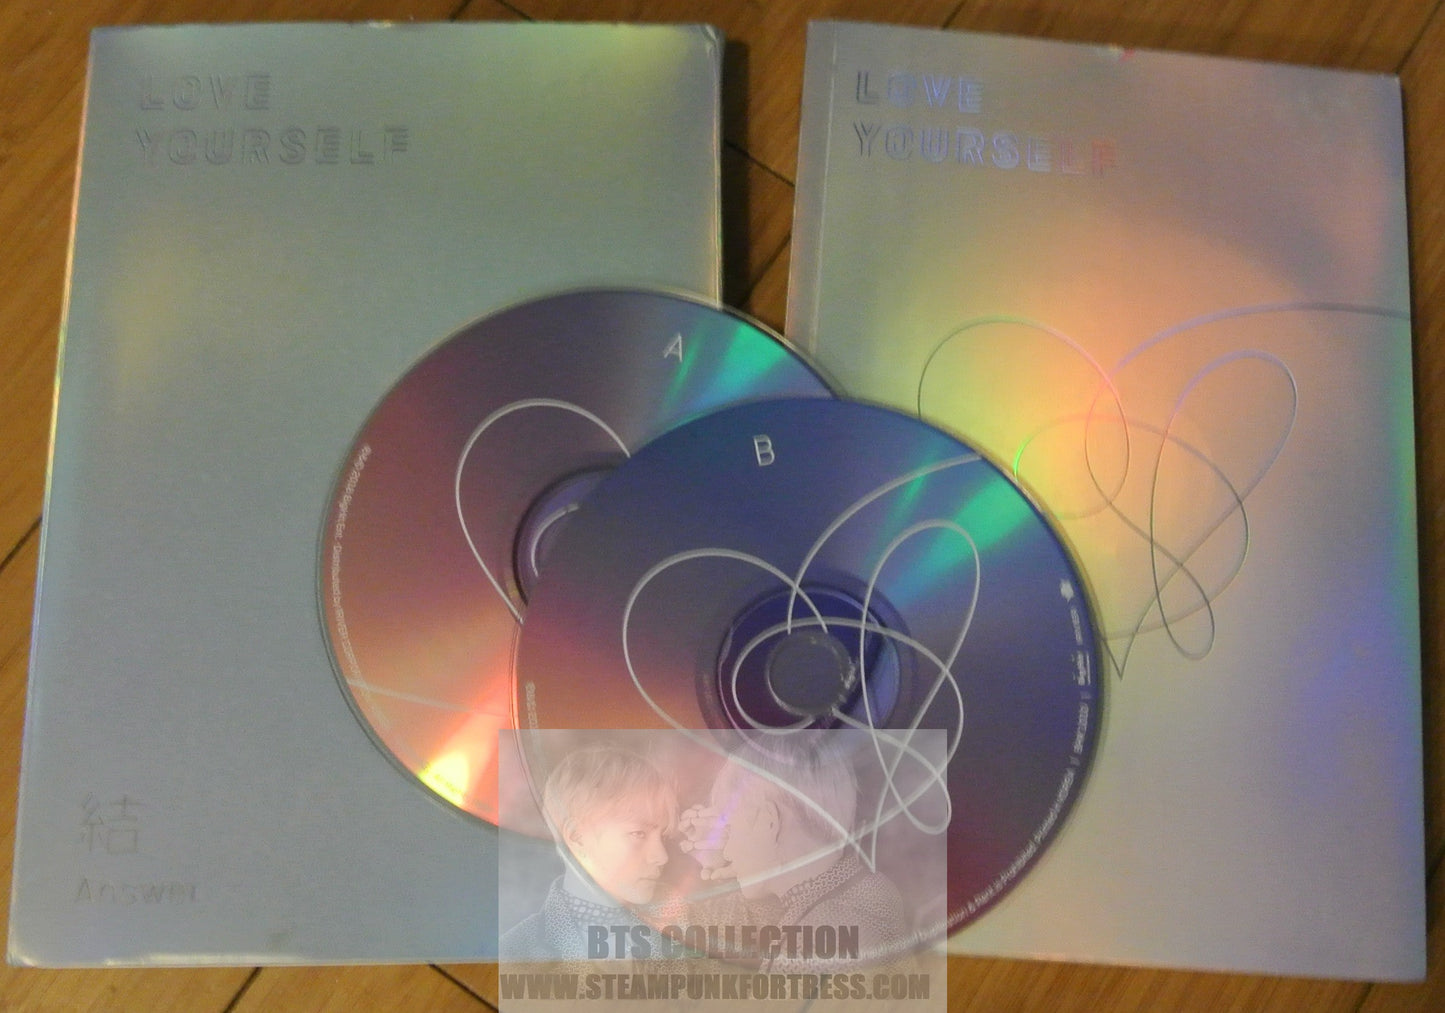 BTS ALBUM LOVE YOURSELF ANSWER 2 CDS VER F PHOTOBOOK JIN SUGA J-HOPE RM JIMIN V JUNGKOOK OFFICIAL MERCHANDISE